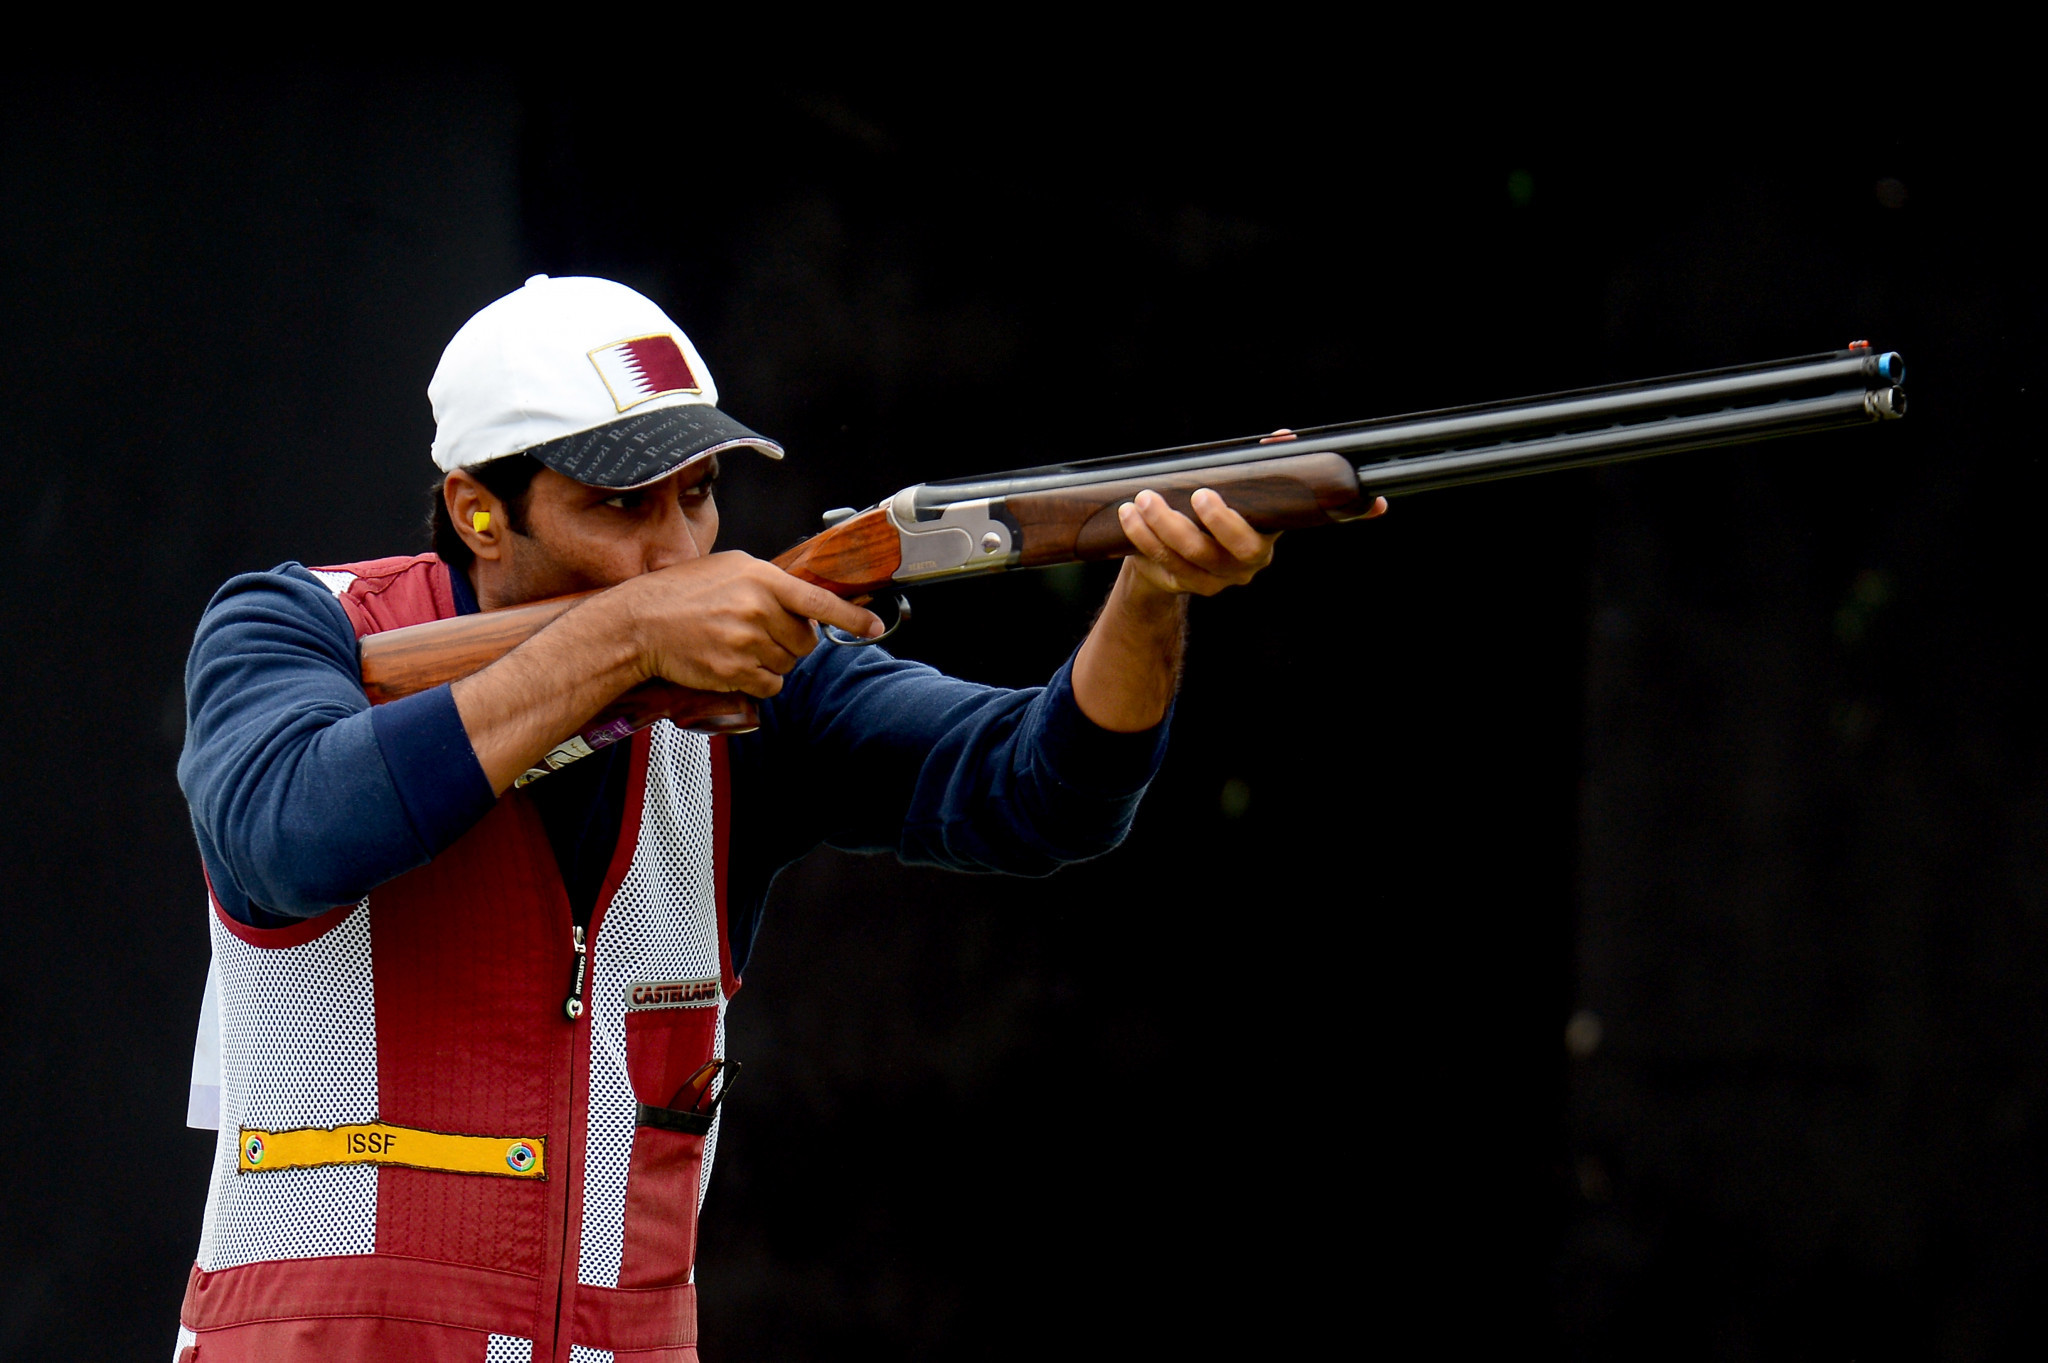 Nasser Saleh Al-Attiyah won an Olympic bronze medal in skeet shooting at London 2012 ©Getty Images